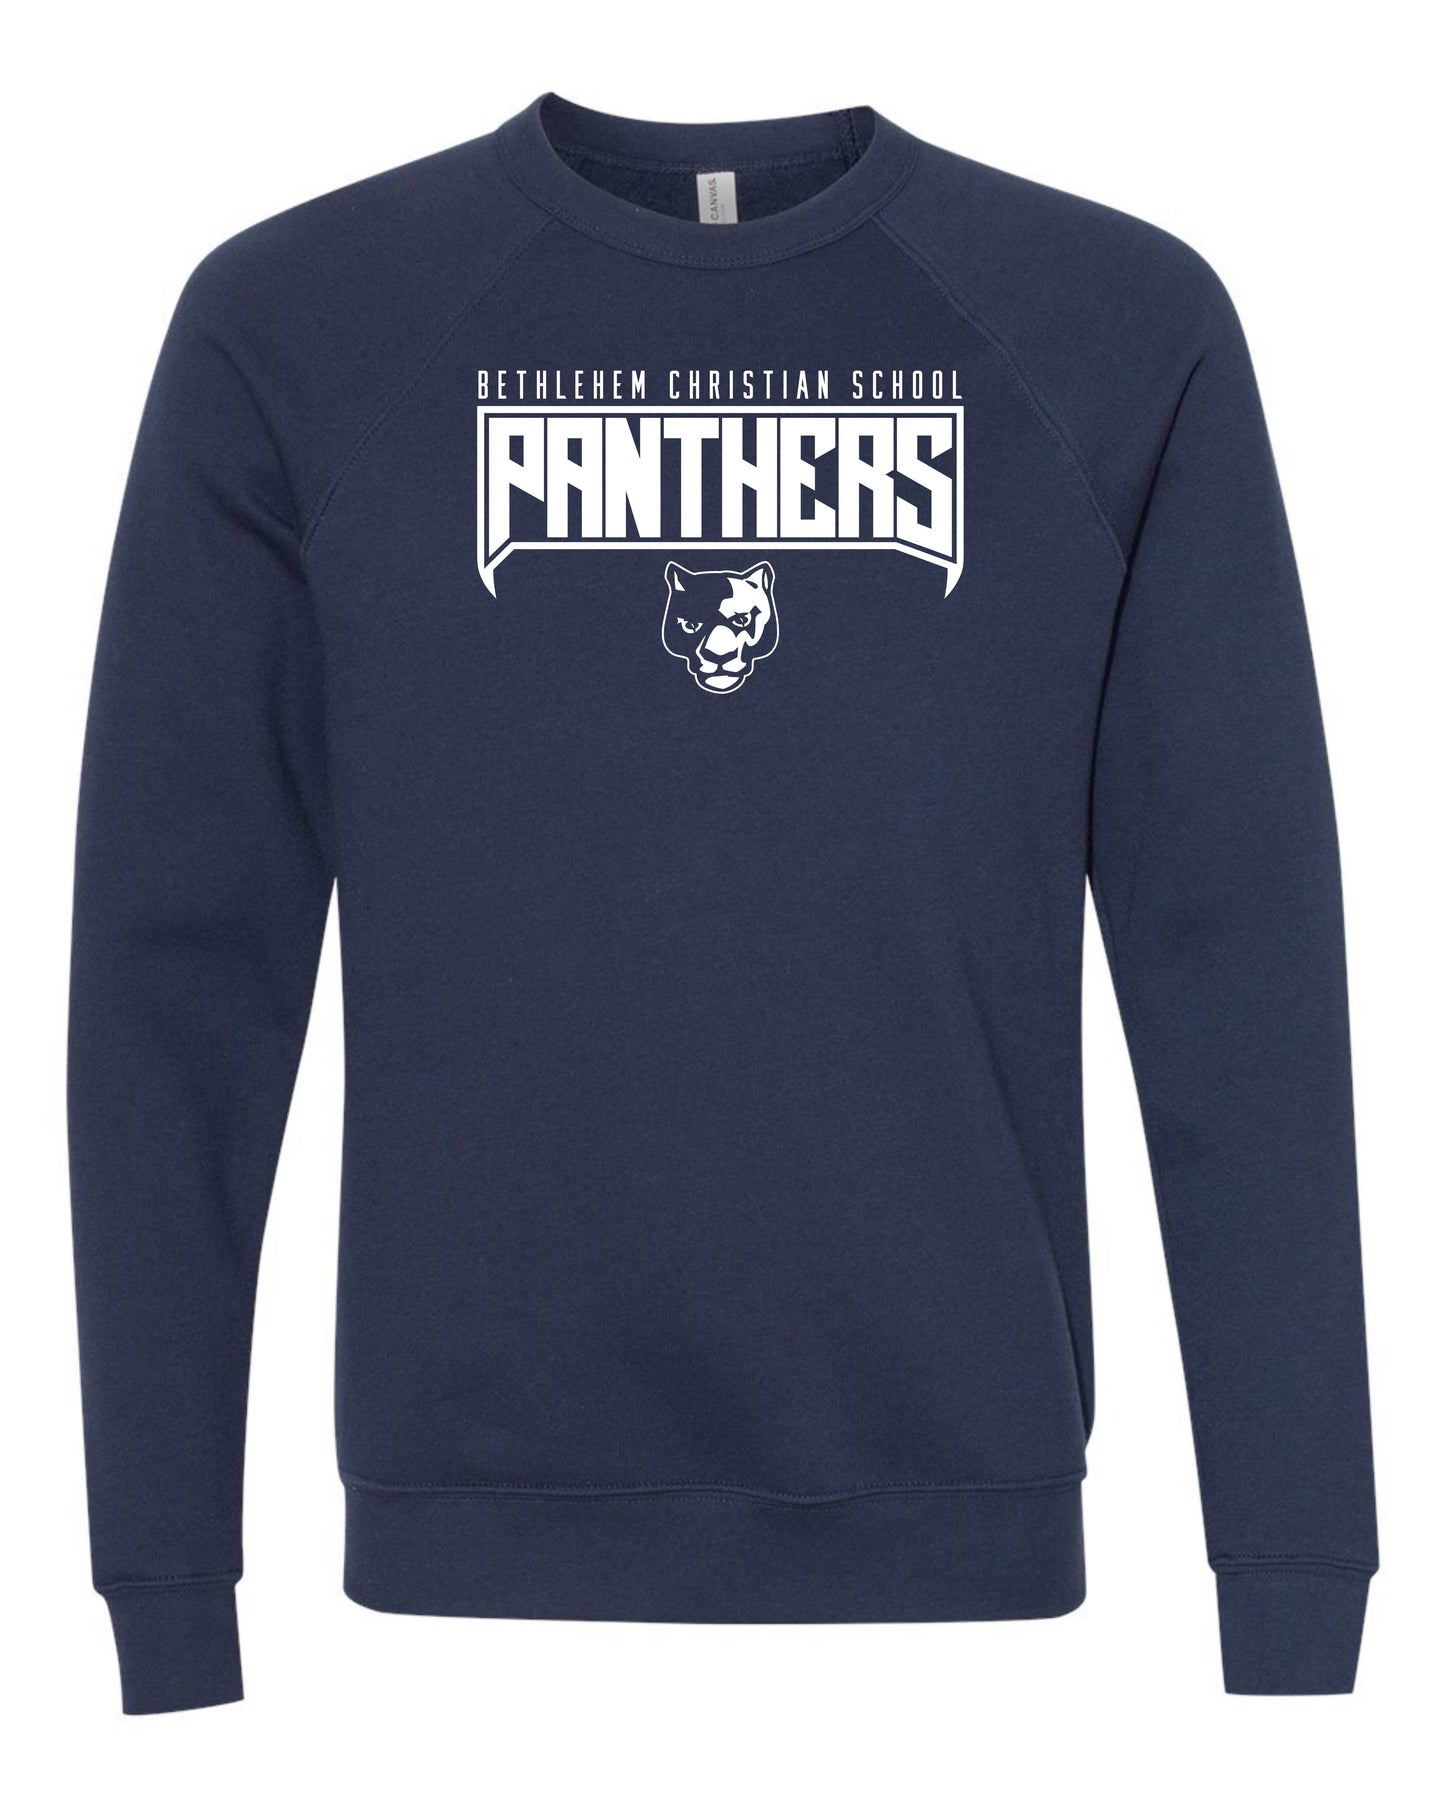 BCS Panthers Fangs - Adult Sweatshirt